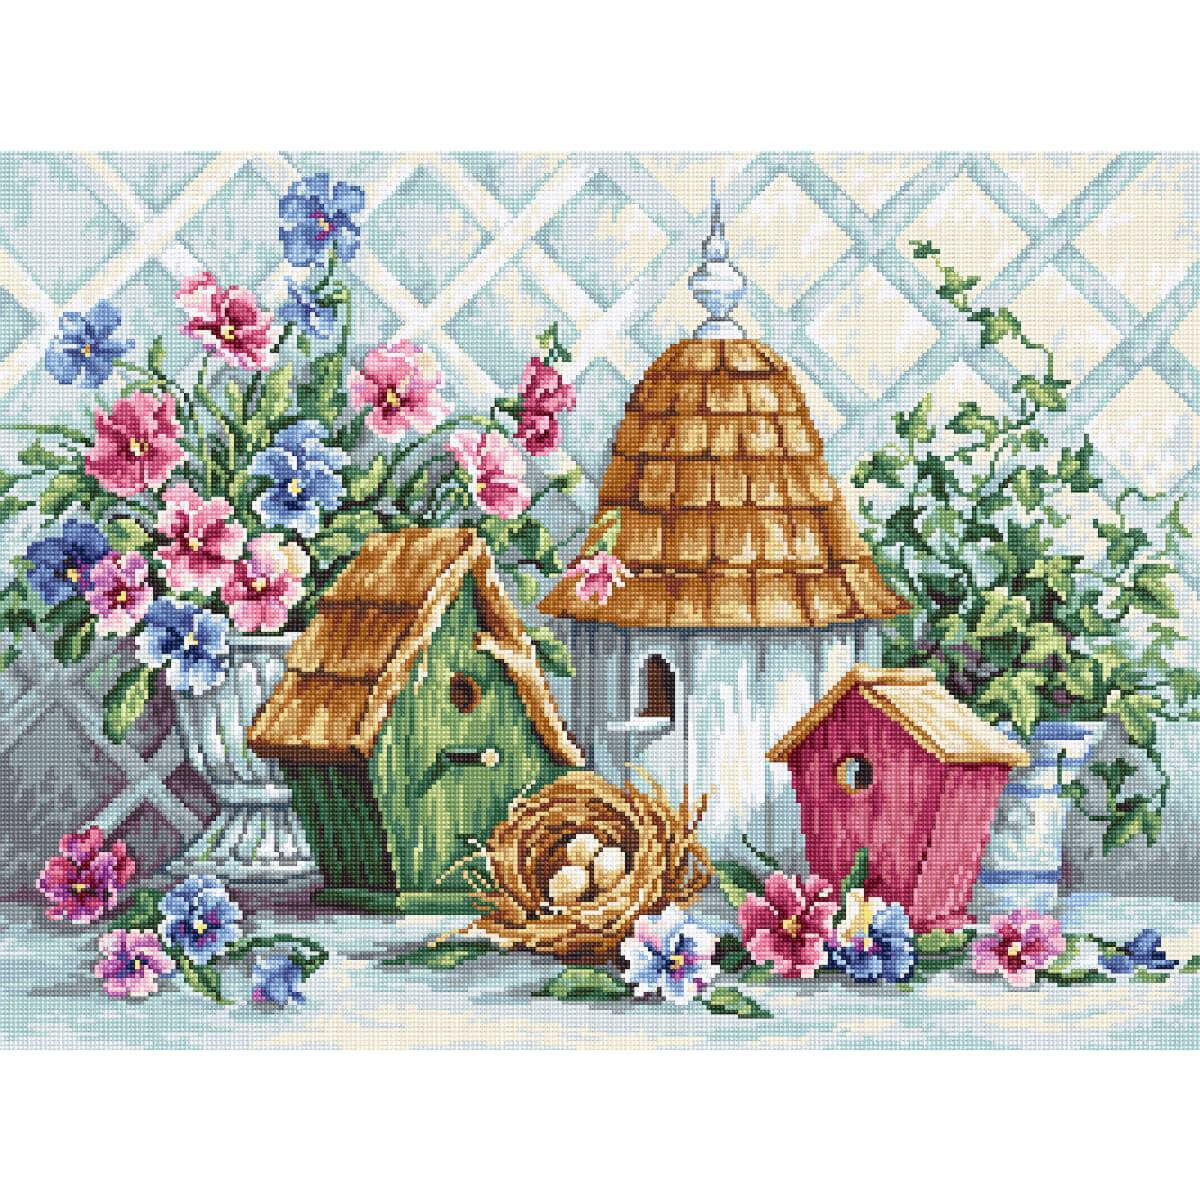 An enchanting garden scene with three birdhouses in...